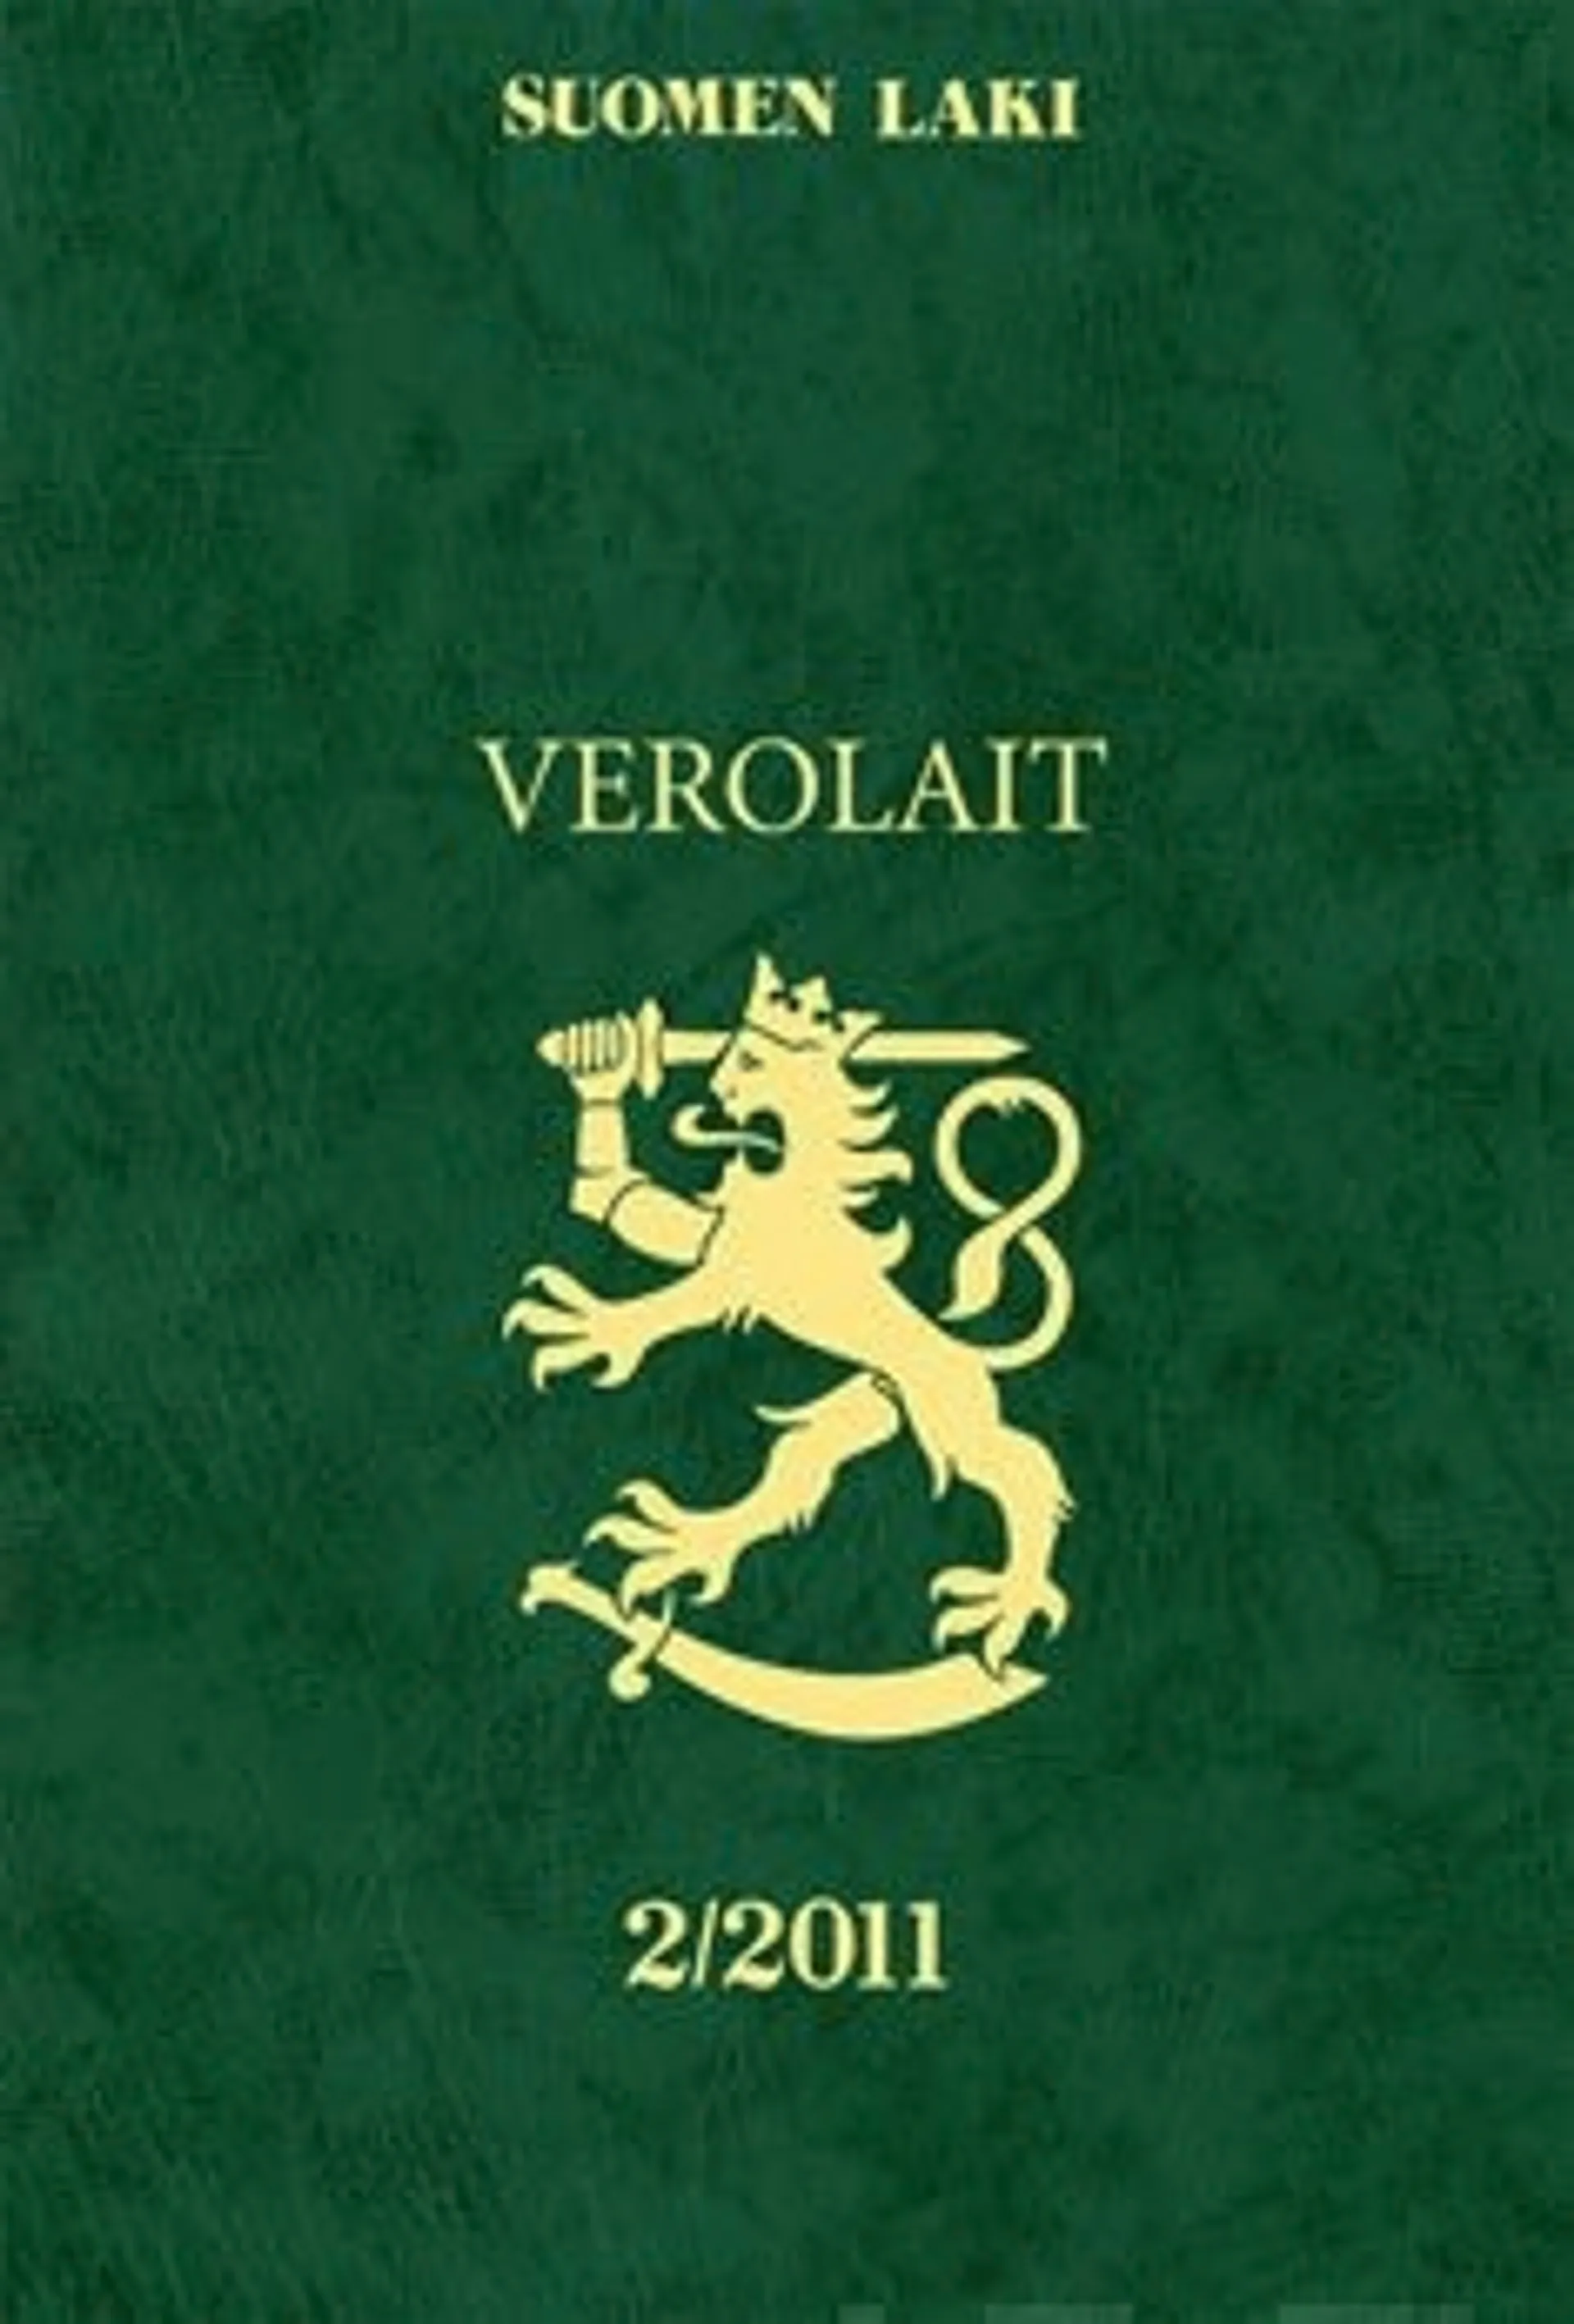 Verolait 2/2011